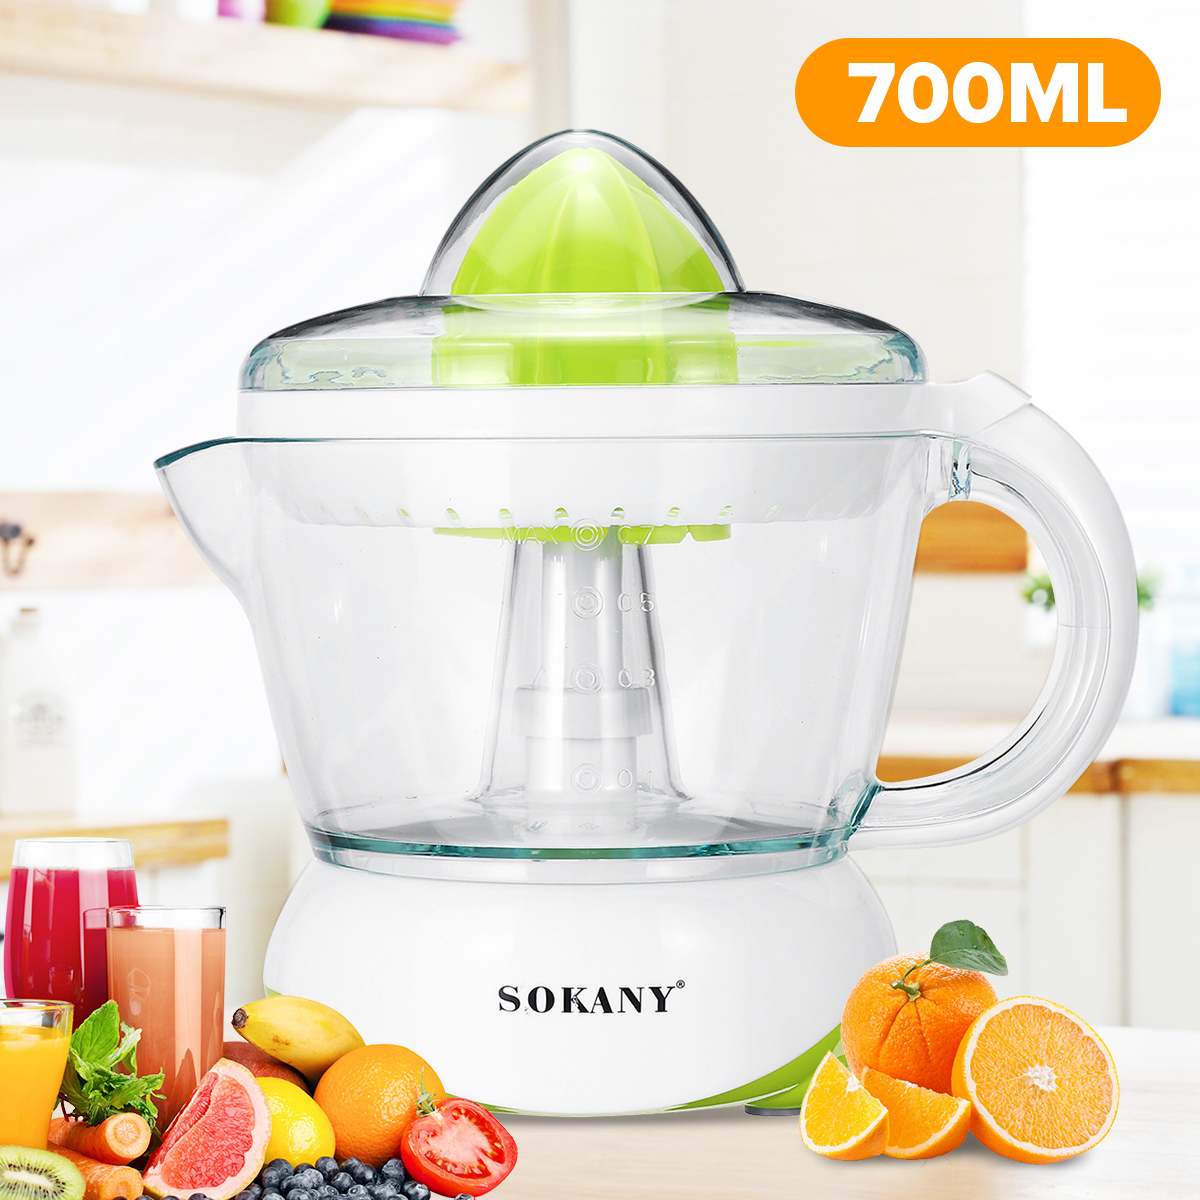 700ml Home Electric Juicer Squeezer Machine Orange Lemon Citrus Fruit Press-Juice Extractor ABS Transparent Scale MarkingHome